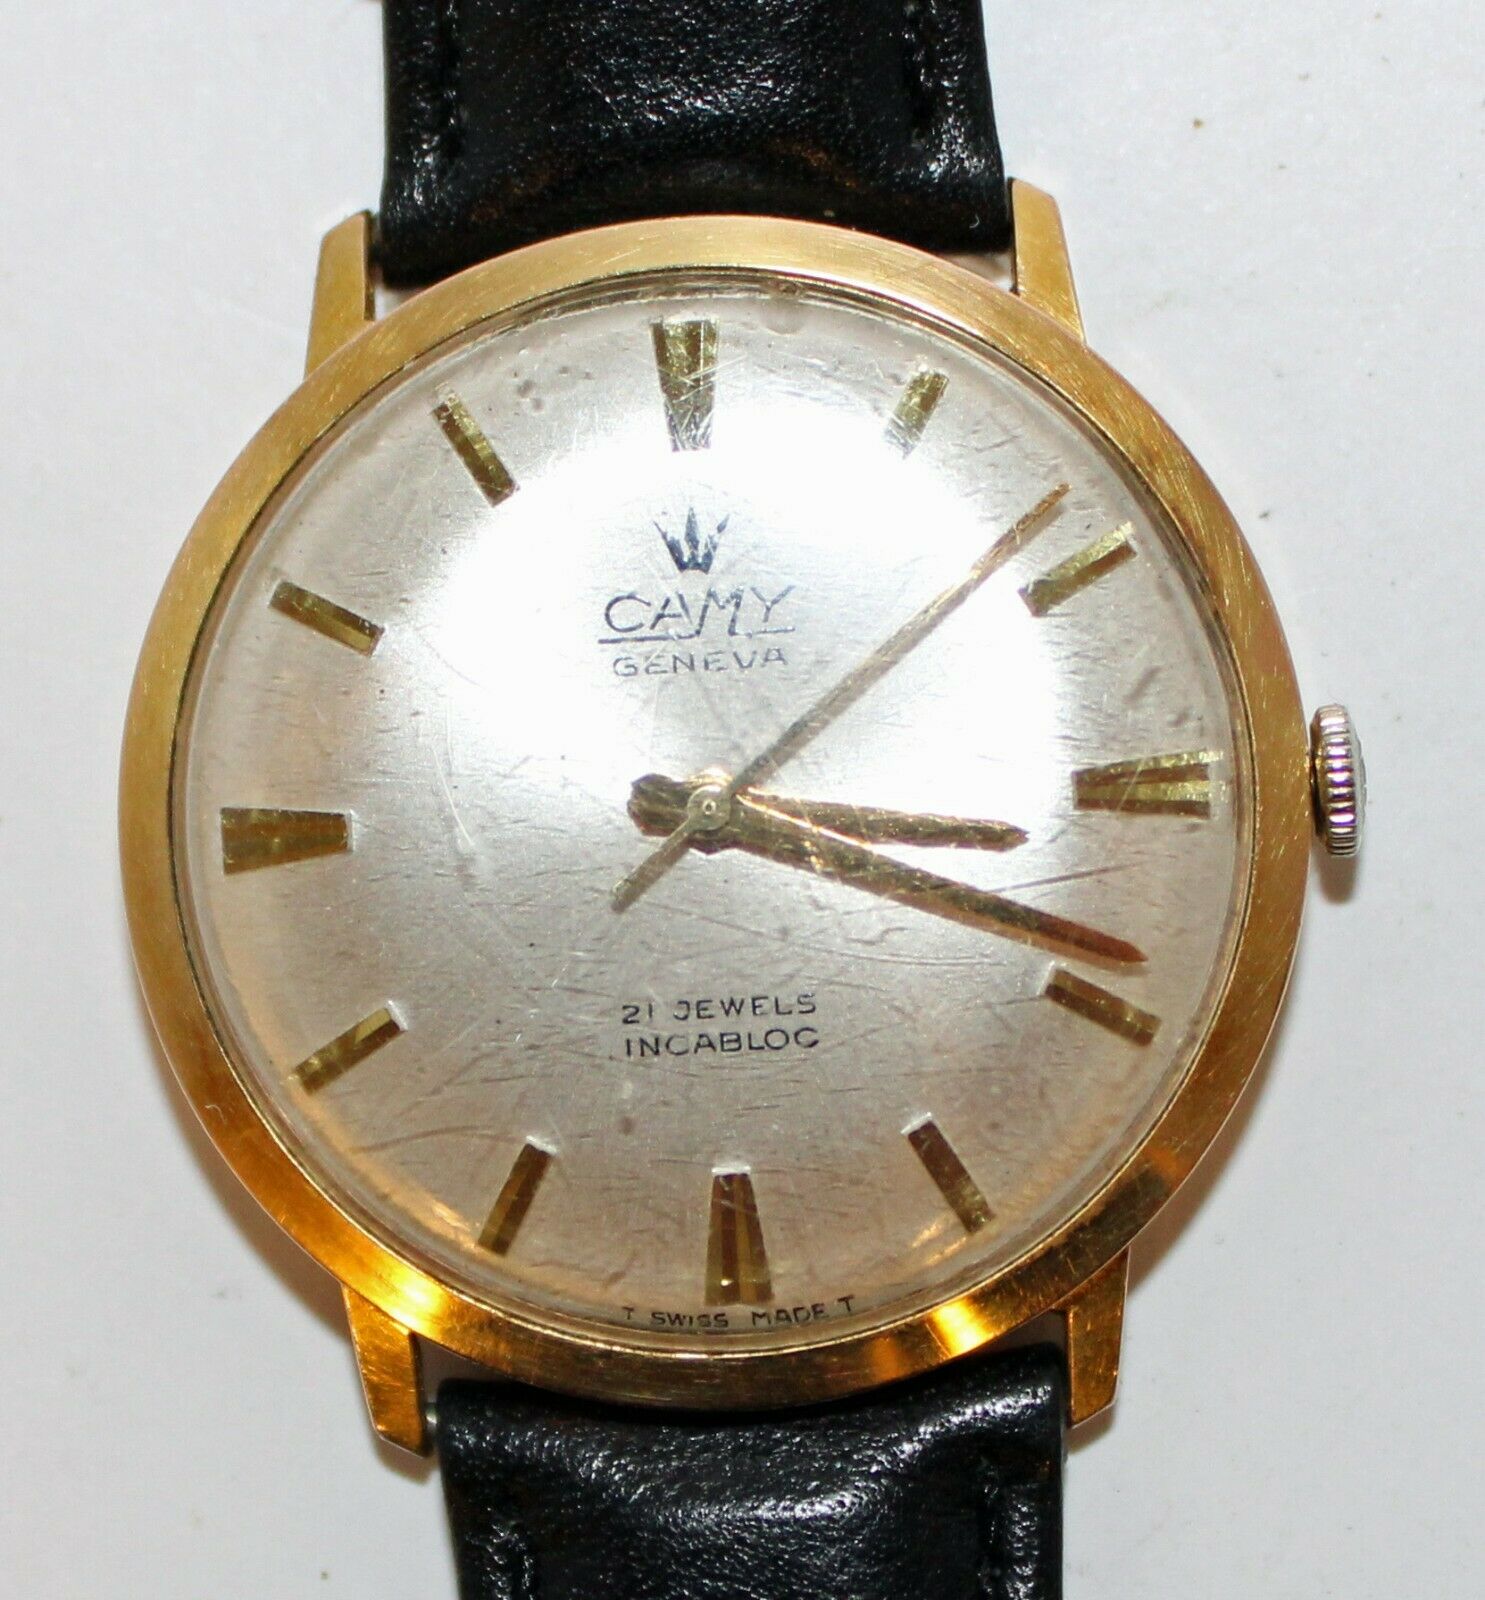 CAMY Geneva 21 Jewels Incabloc swiss vintage wrist watch gents